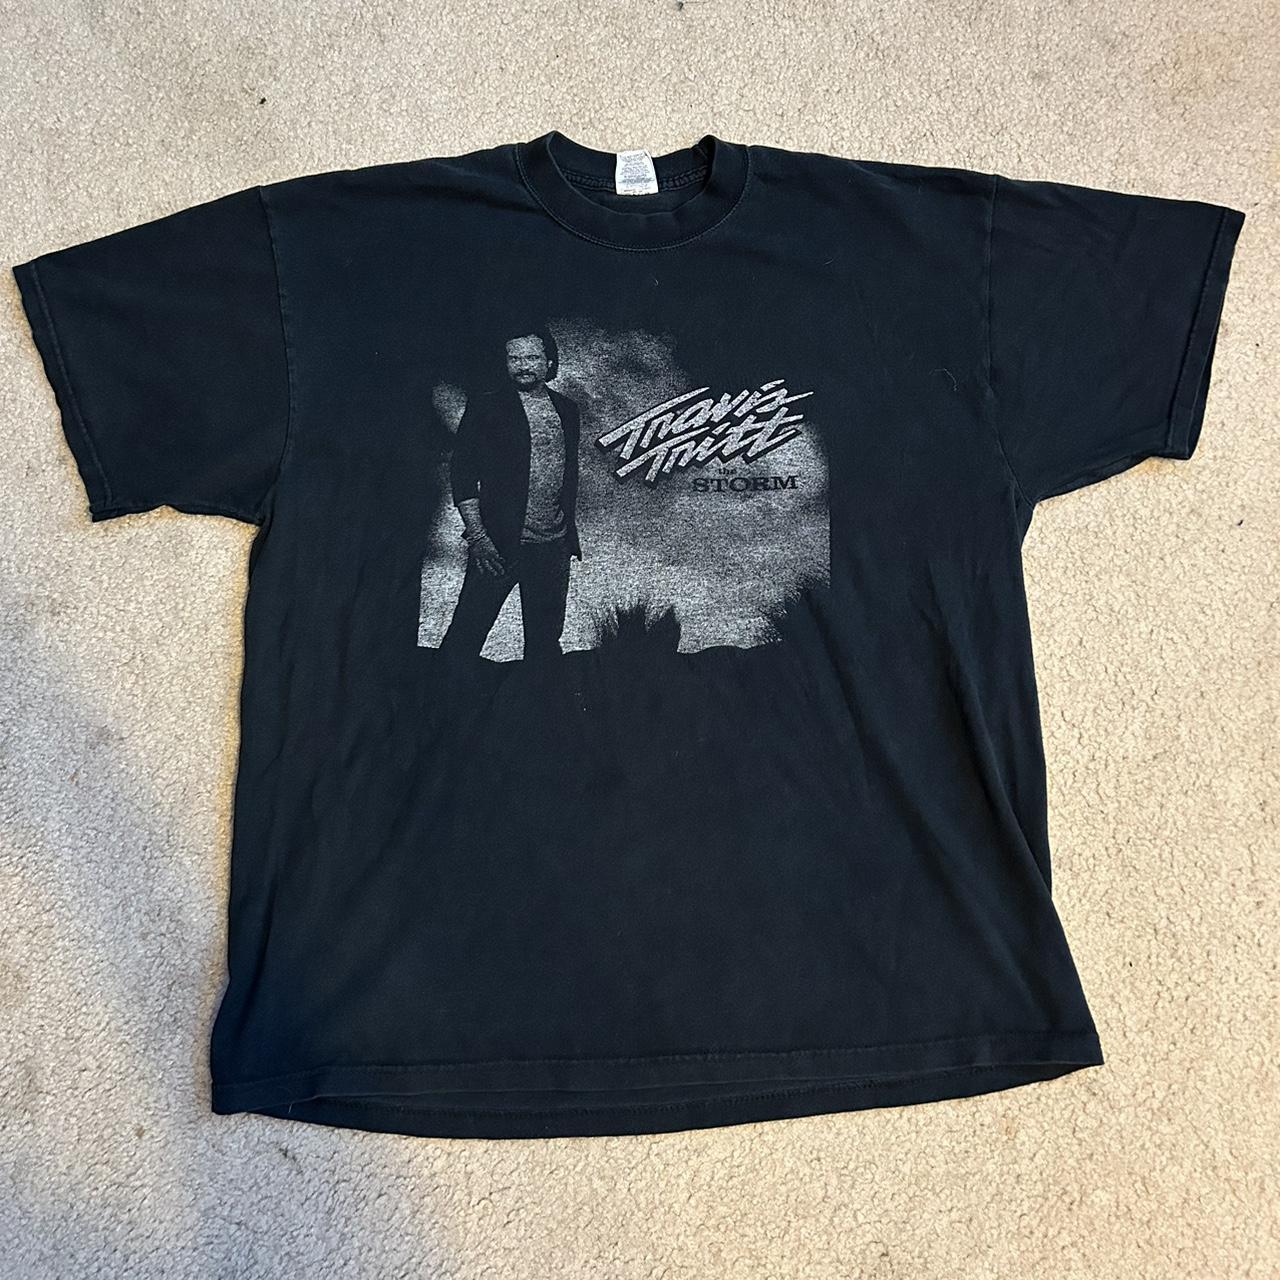 Vintage Travis Tritt The Storm Shirt From 2007 Size... - Depop